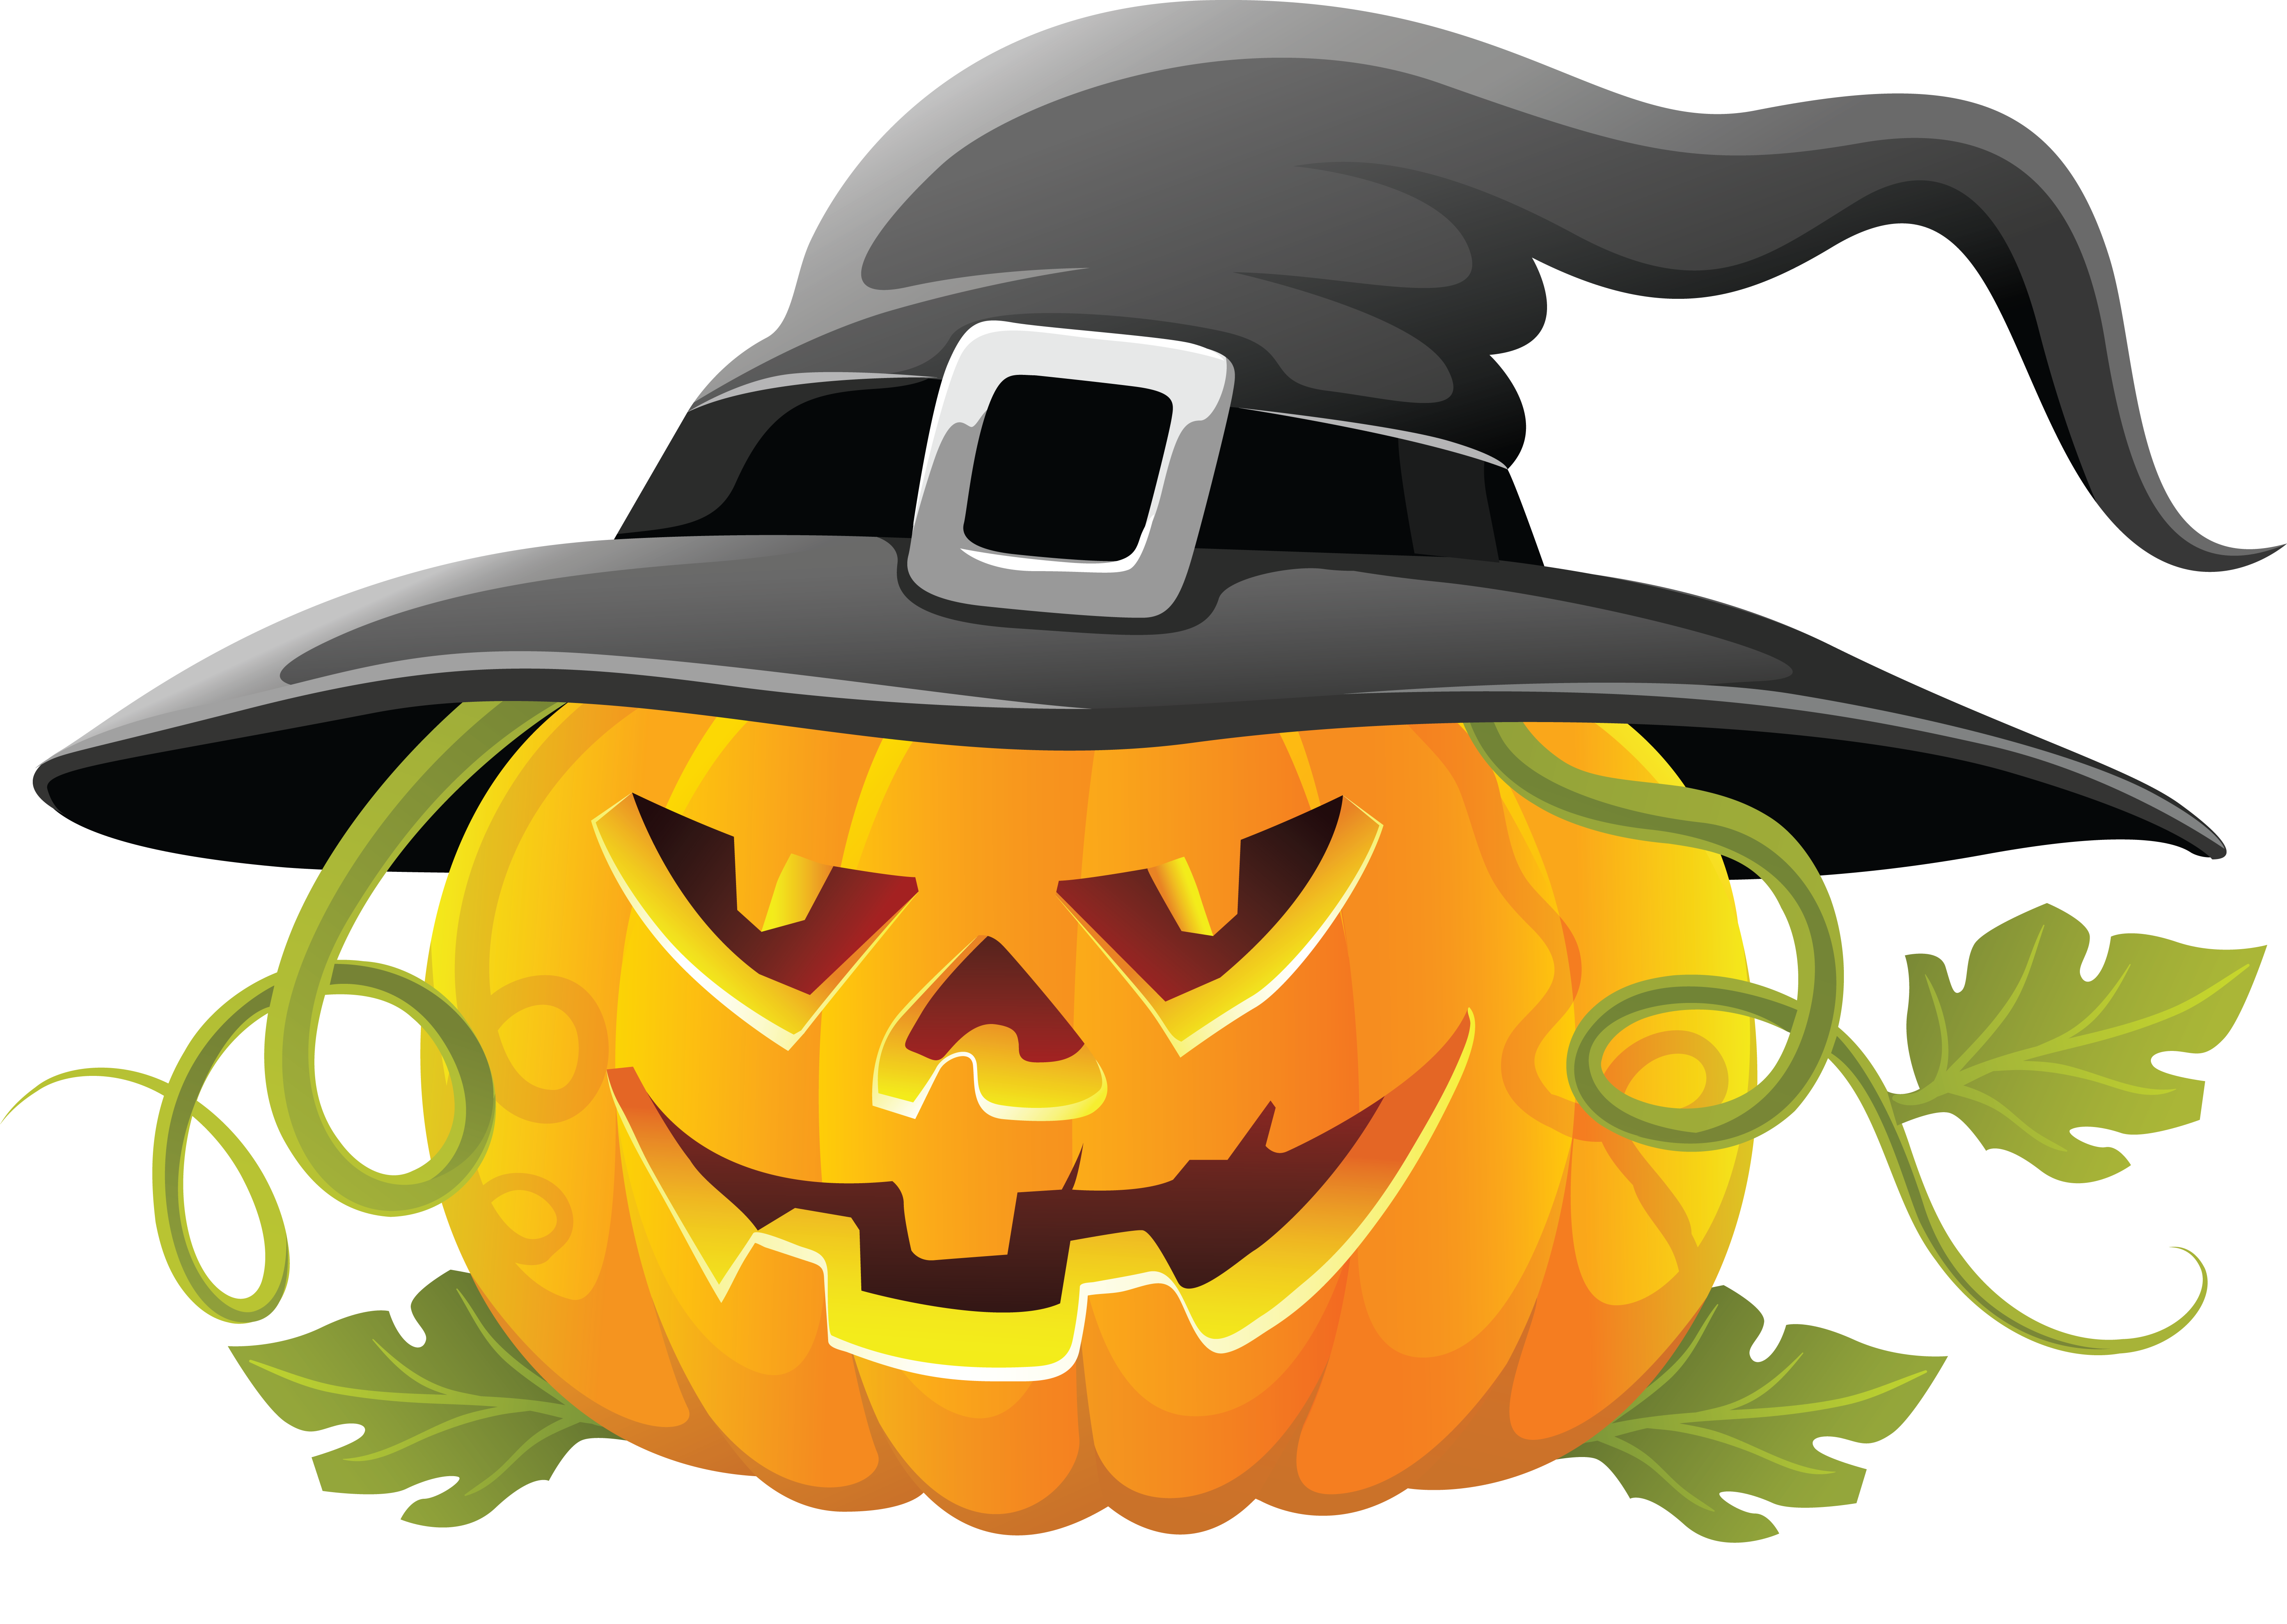 Download PNG image - Halloween Pumpkin PNG Clipart 